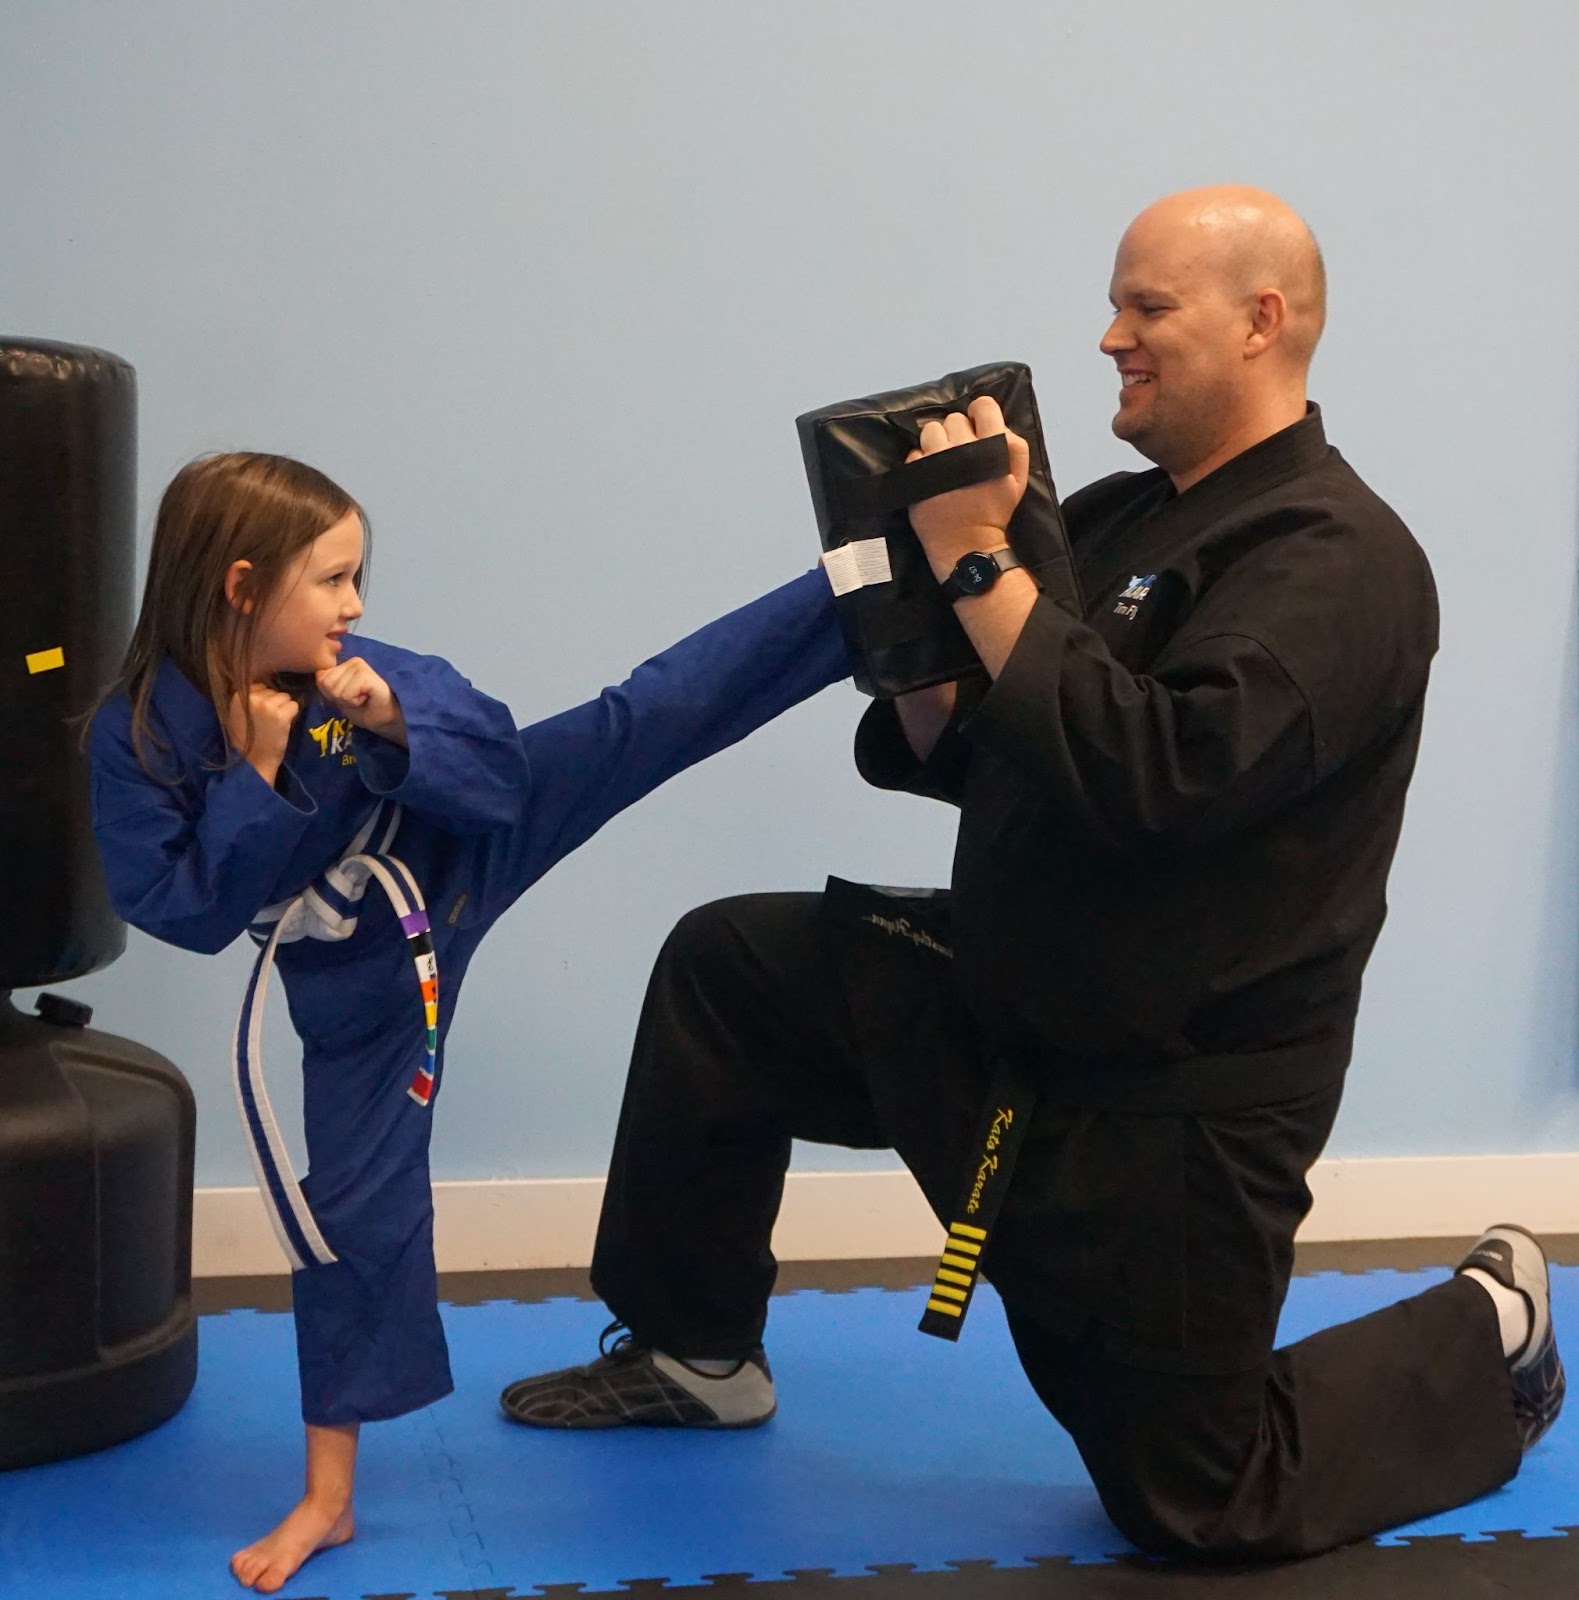 Kato Karate  - teaching kids Life Skills disguised as Martial Arts training